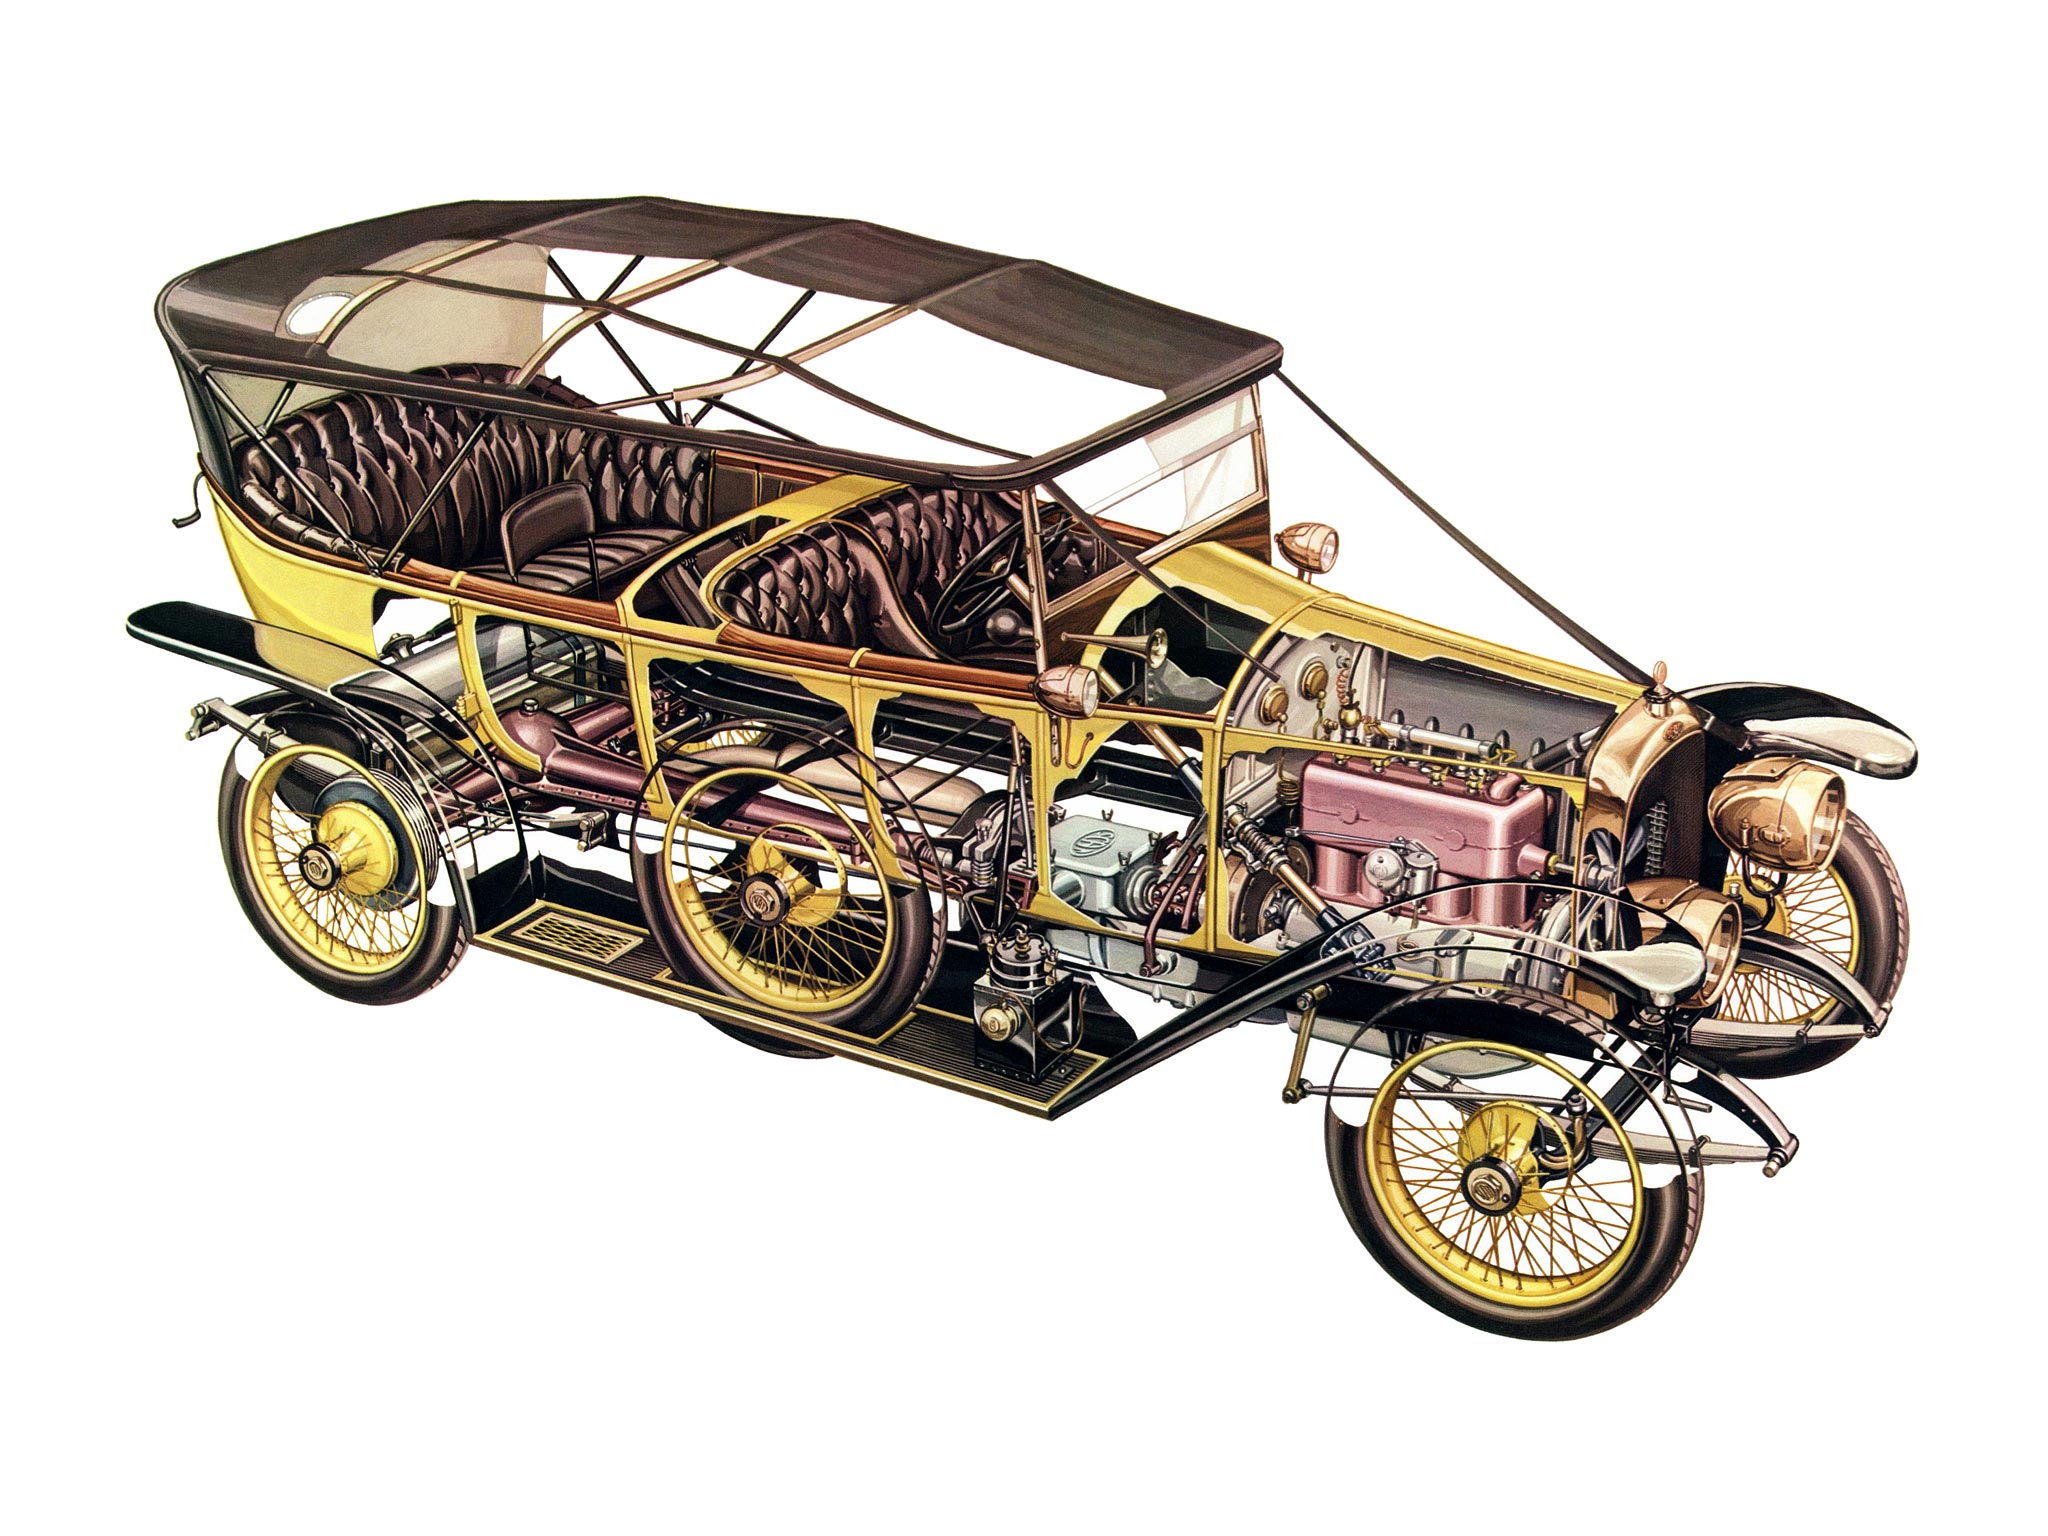 SCAT car cutaway drawing